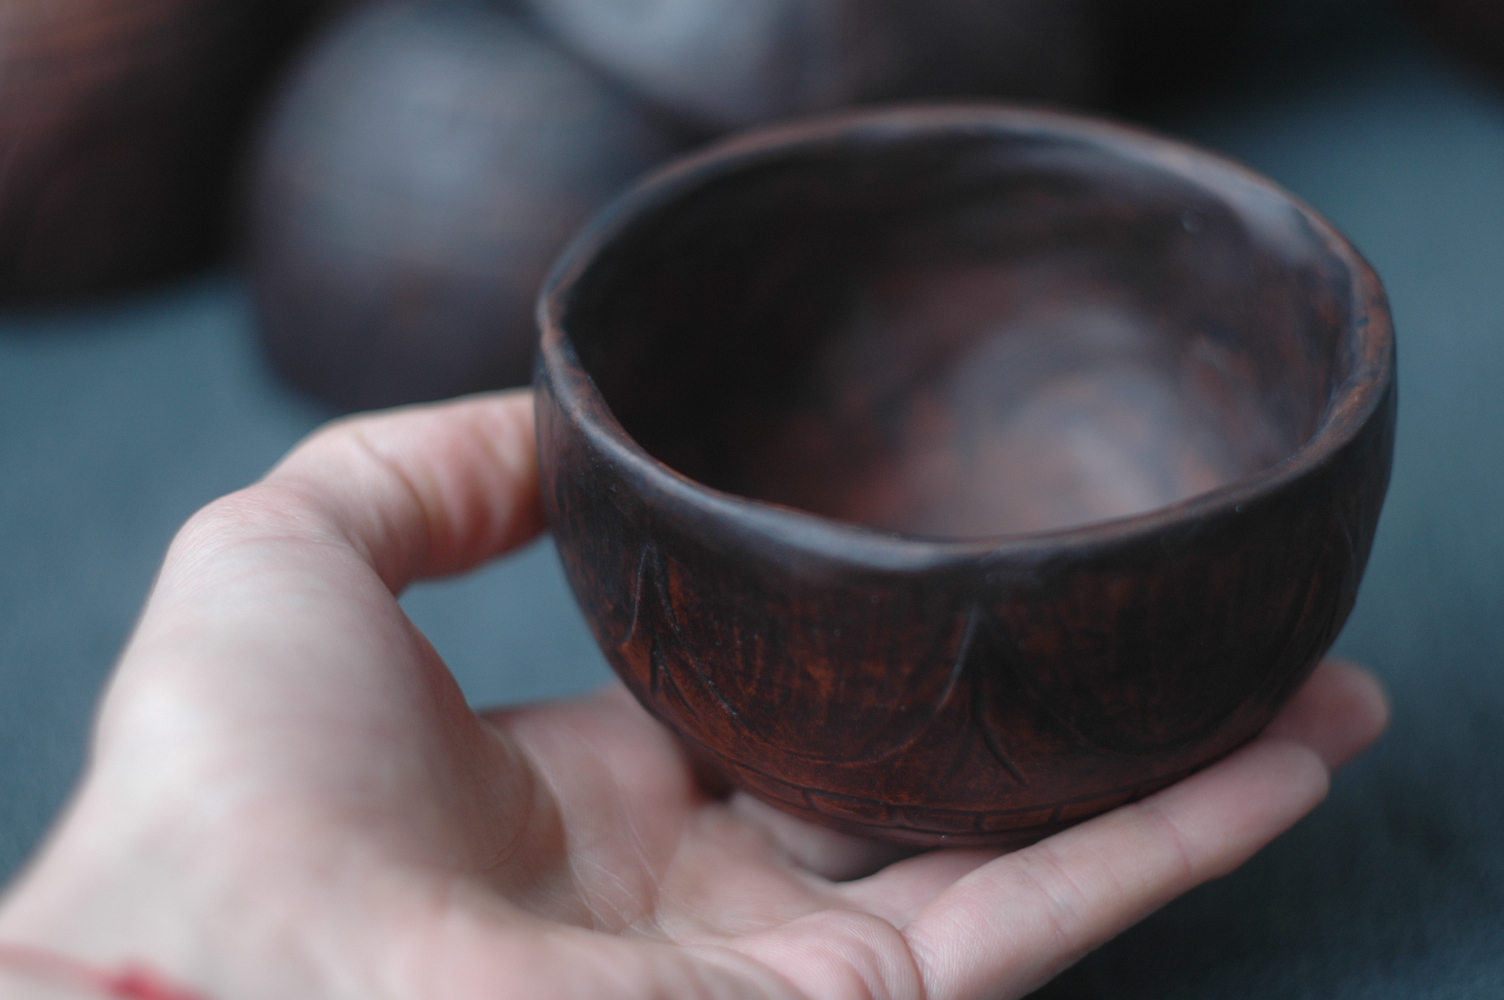 Pottery ceramic bowl “Sun” ~7oz